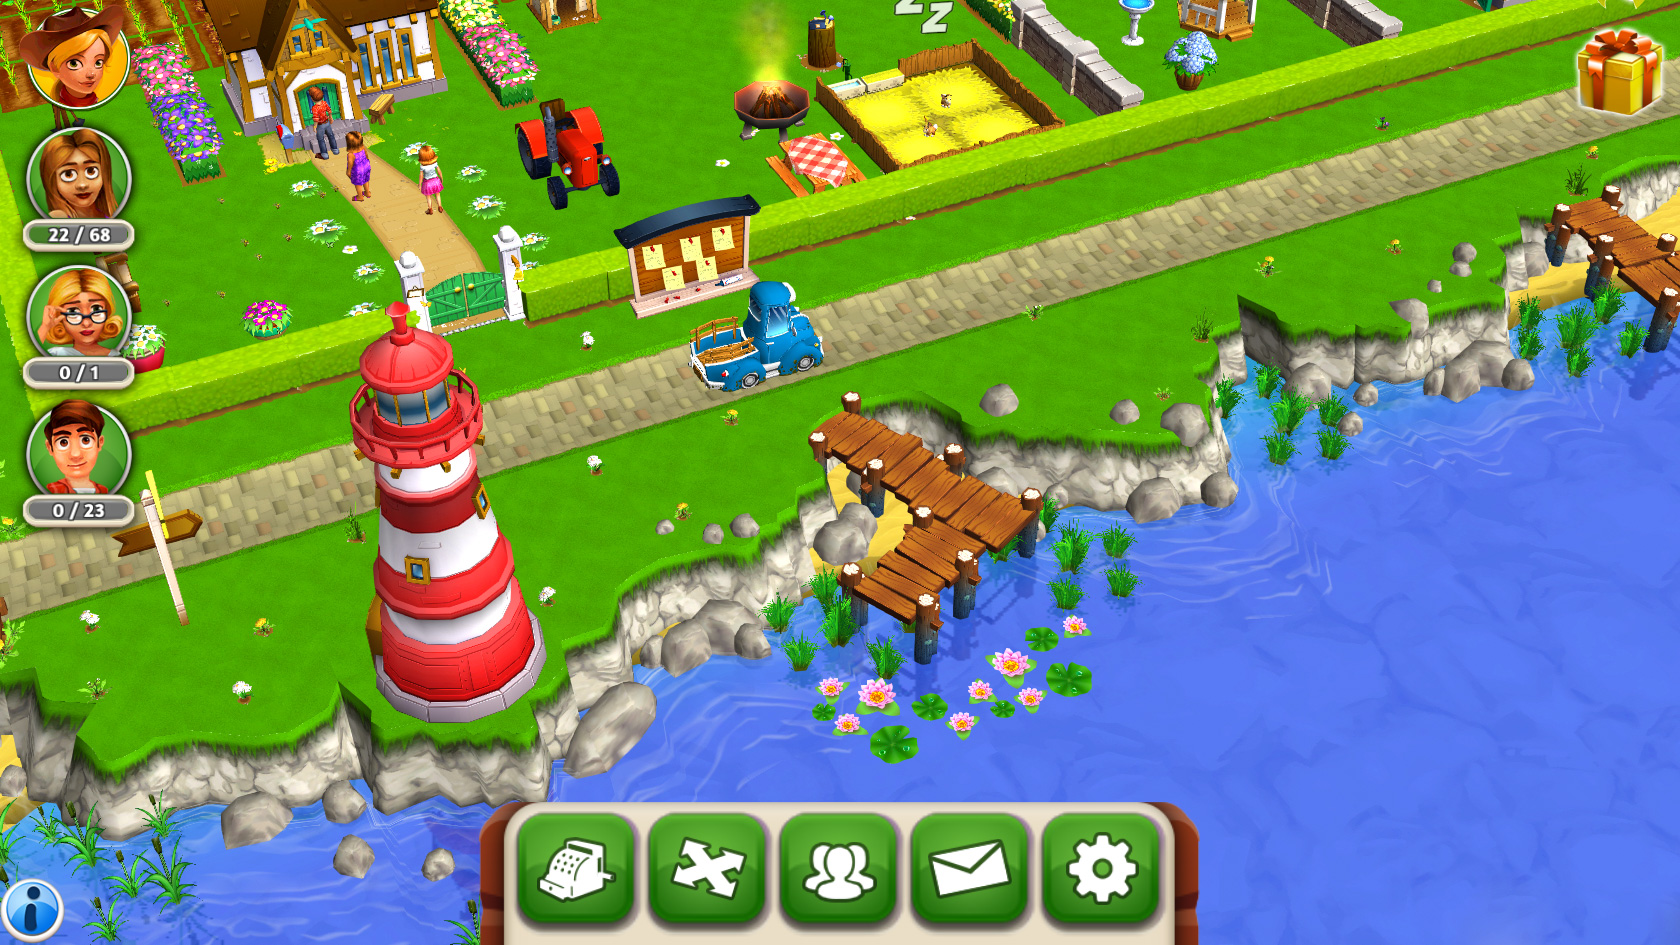 My Free Farm 2 jogo MMO gratuito